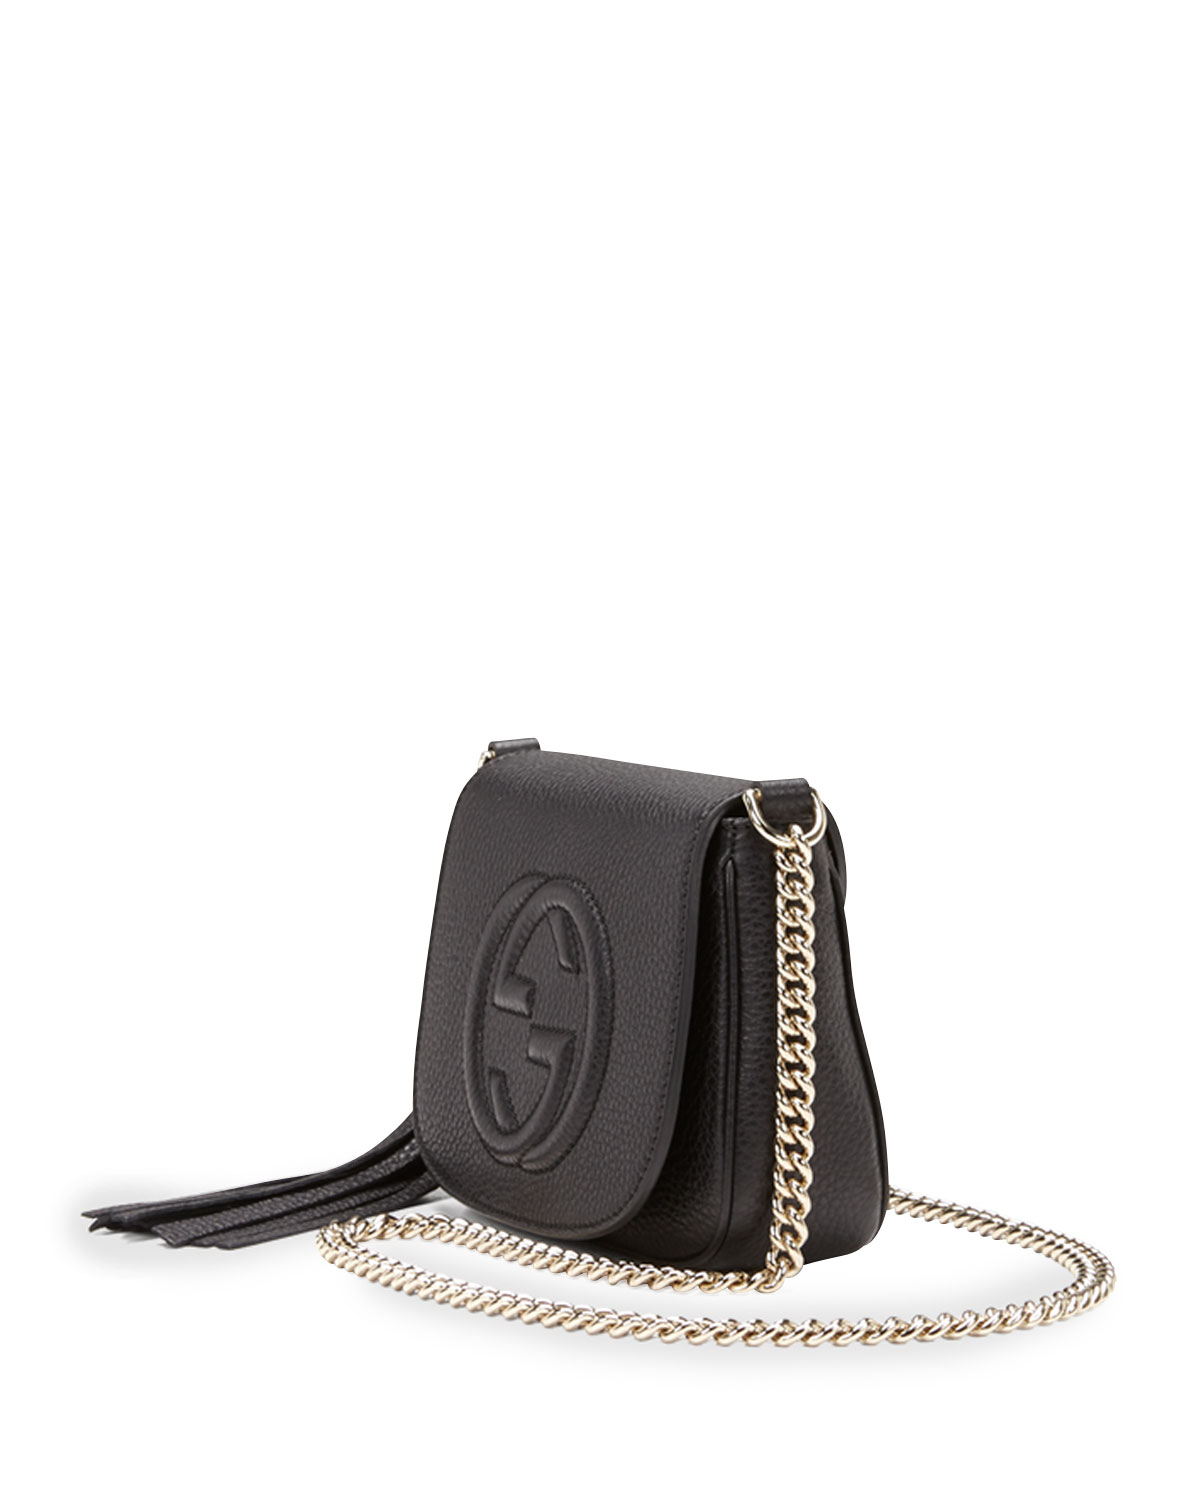 Lyst - Gucci Soho Leather Chain Crossbody Bag in Black